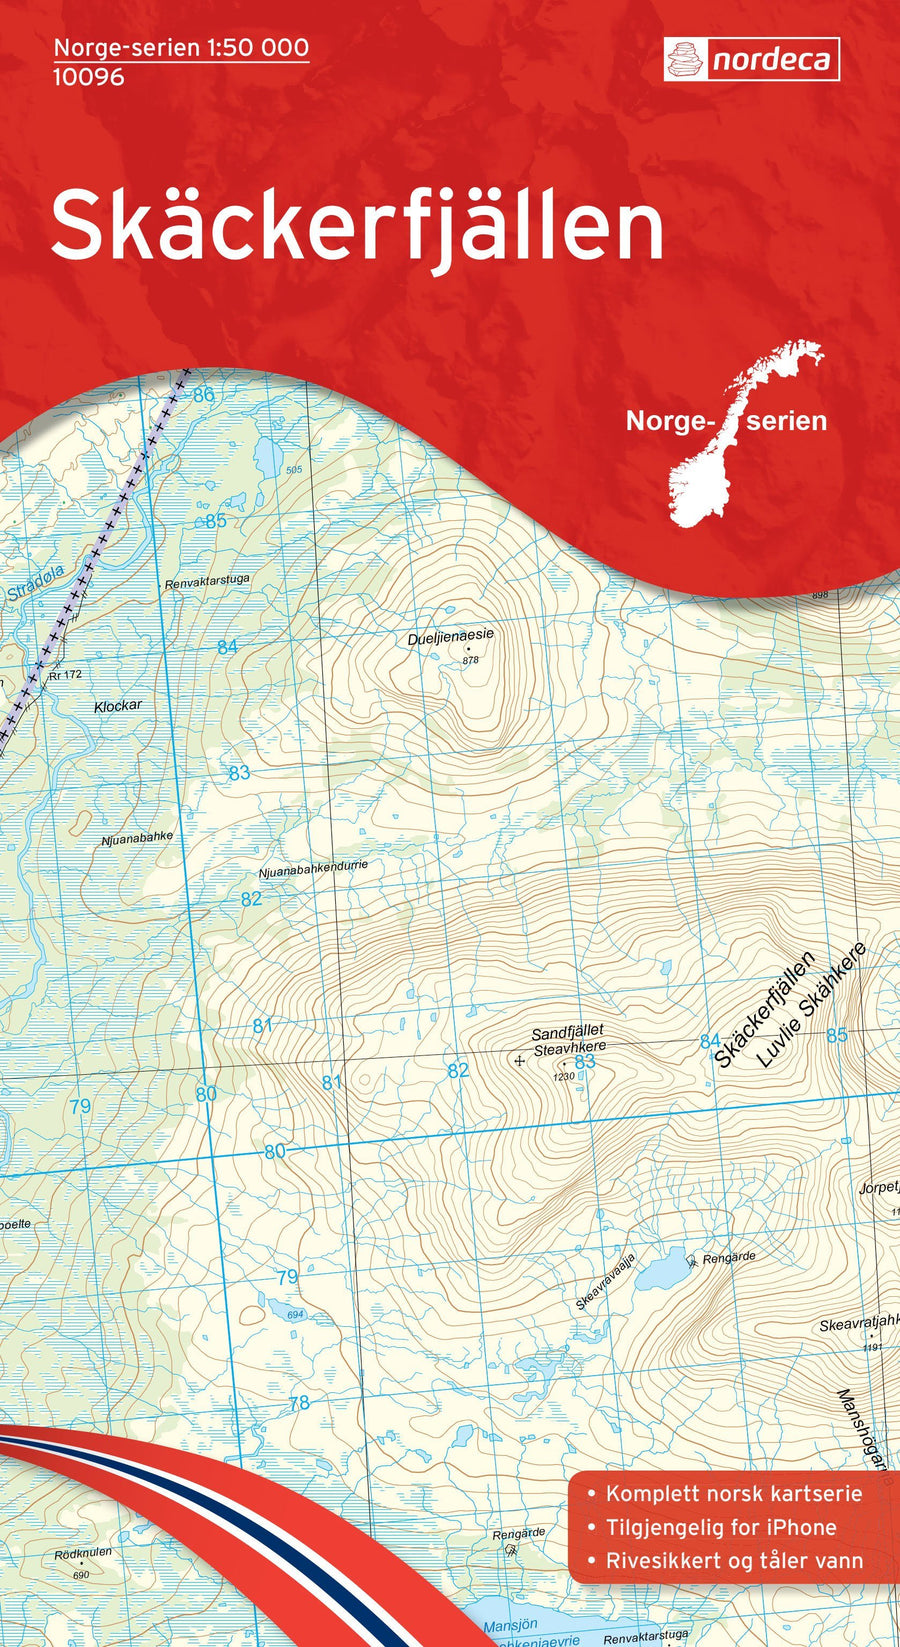 Carte de randonnée n° 10096 - Skackerfjallen (Norvège) | Nordeca - Norge-serien carte pliée Nordeca 